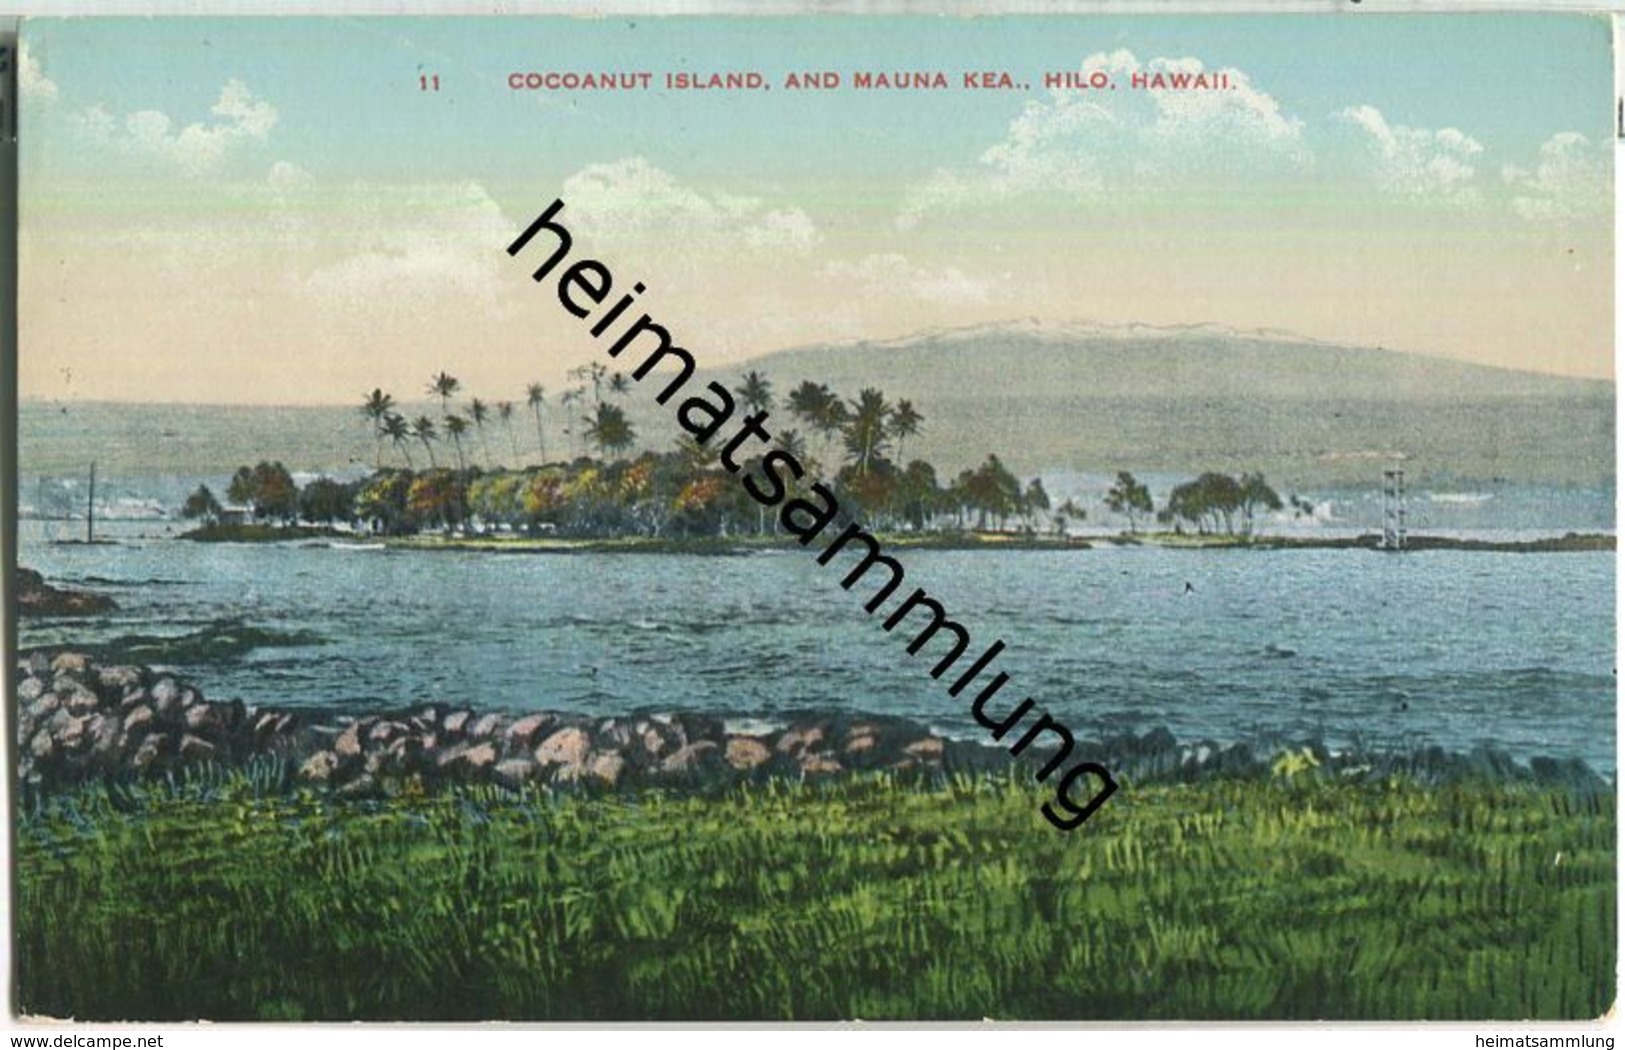 Hawaii - Hilo - Mauna Kea - Cocoanut Island - Hilo